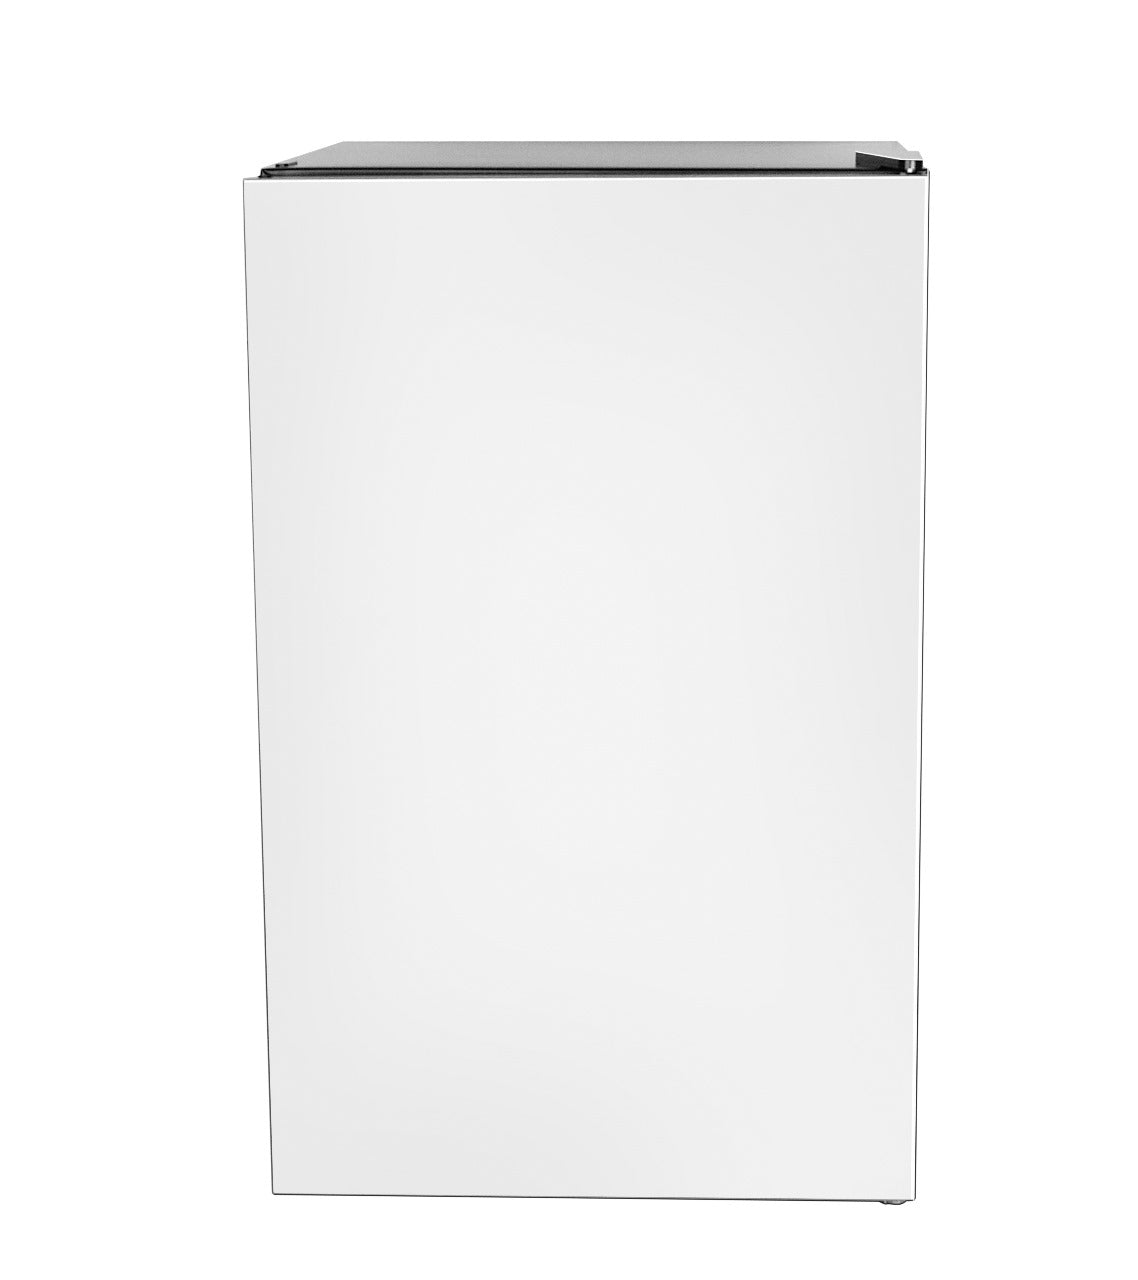 Bull Contemporary Refrigerator - Stainless Steel, 4.5 cu ft, Reversible Door, Built-in Can Dispenser